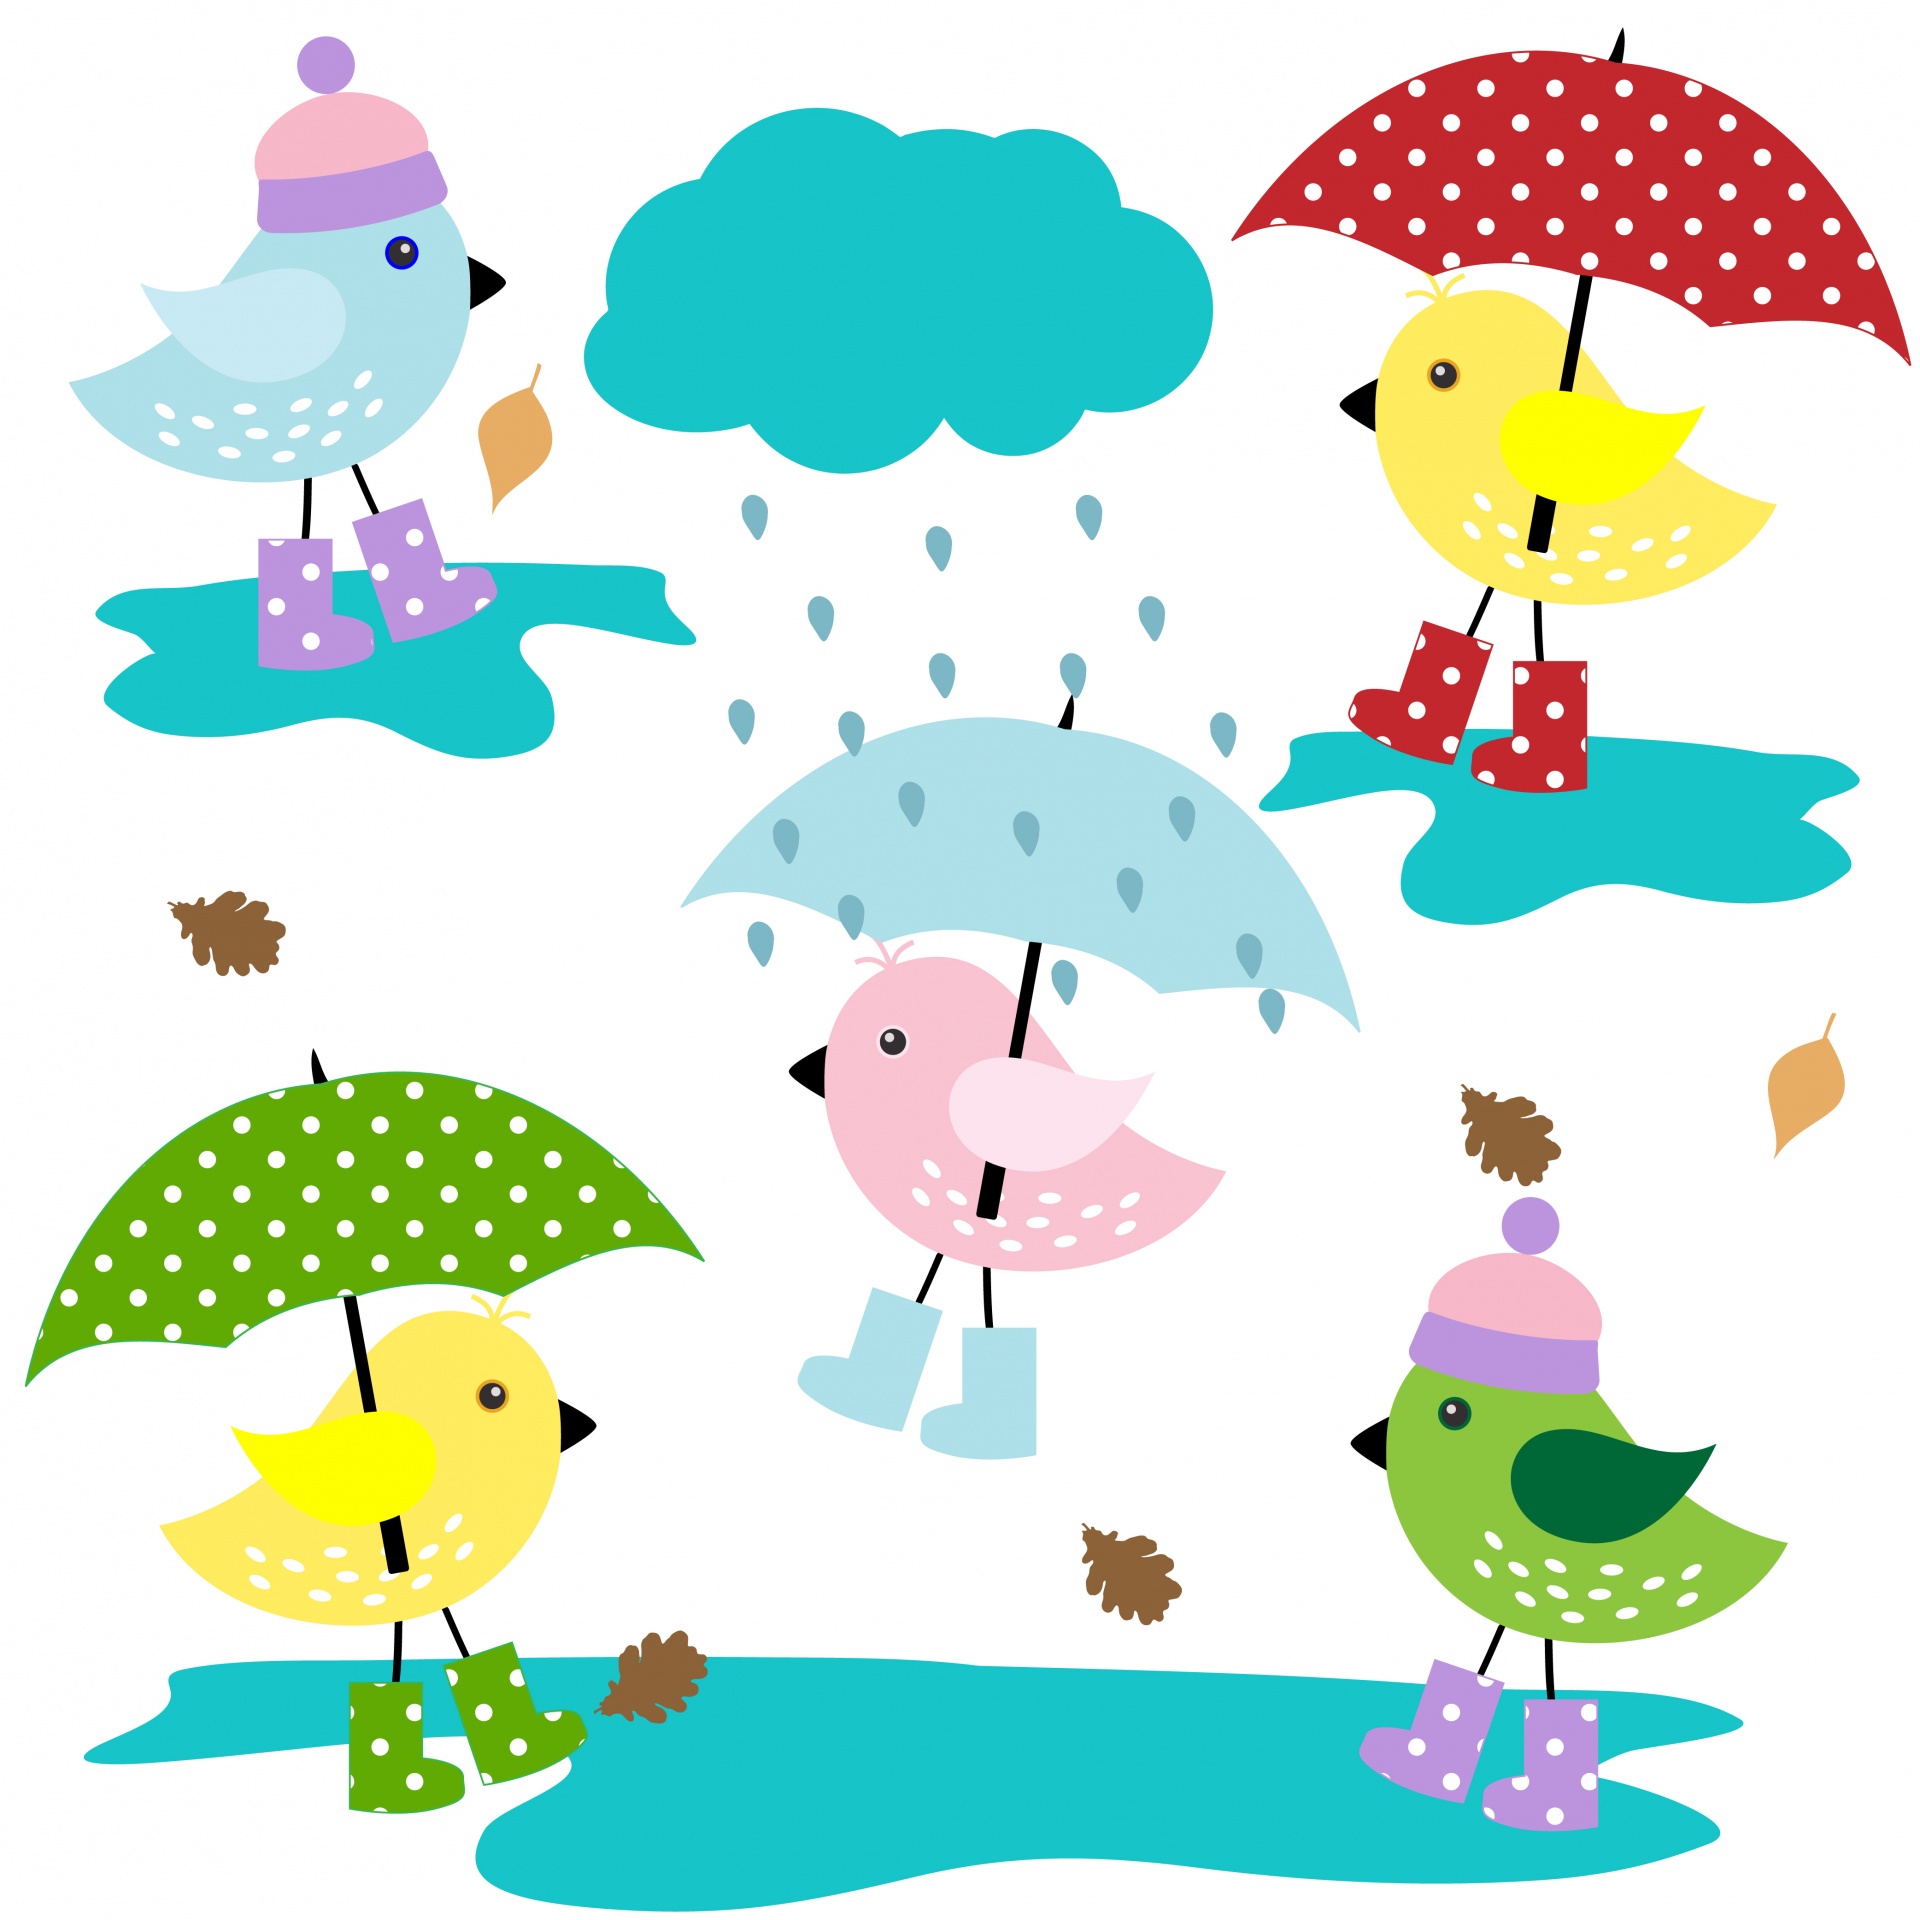 Bird Umbrella Cute Illustration